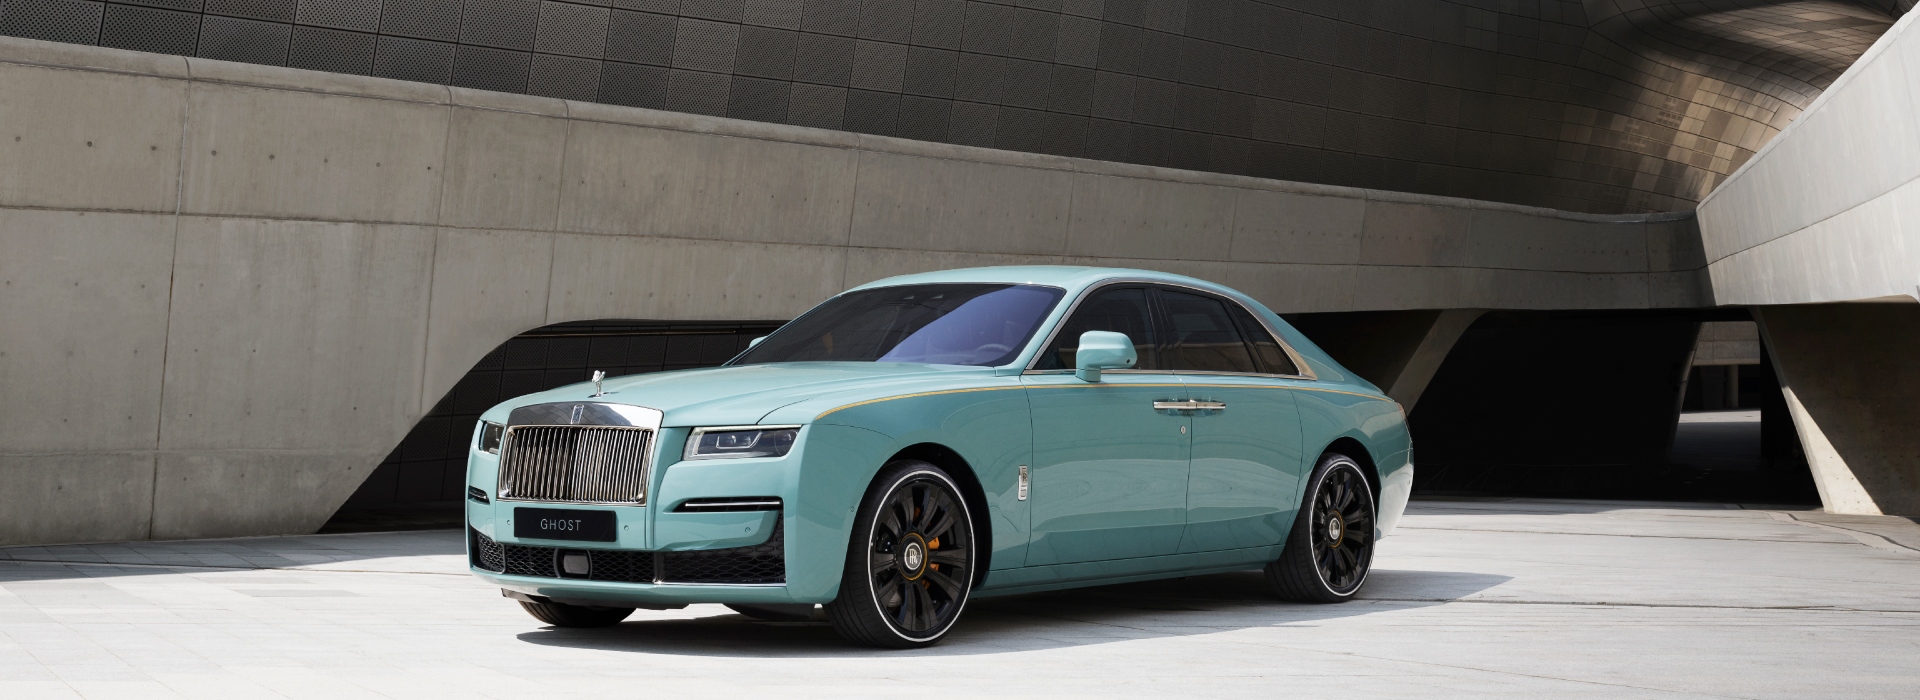 2023: Godina uspeha za Rolls Royce